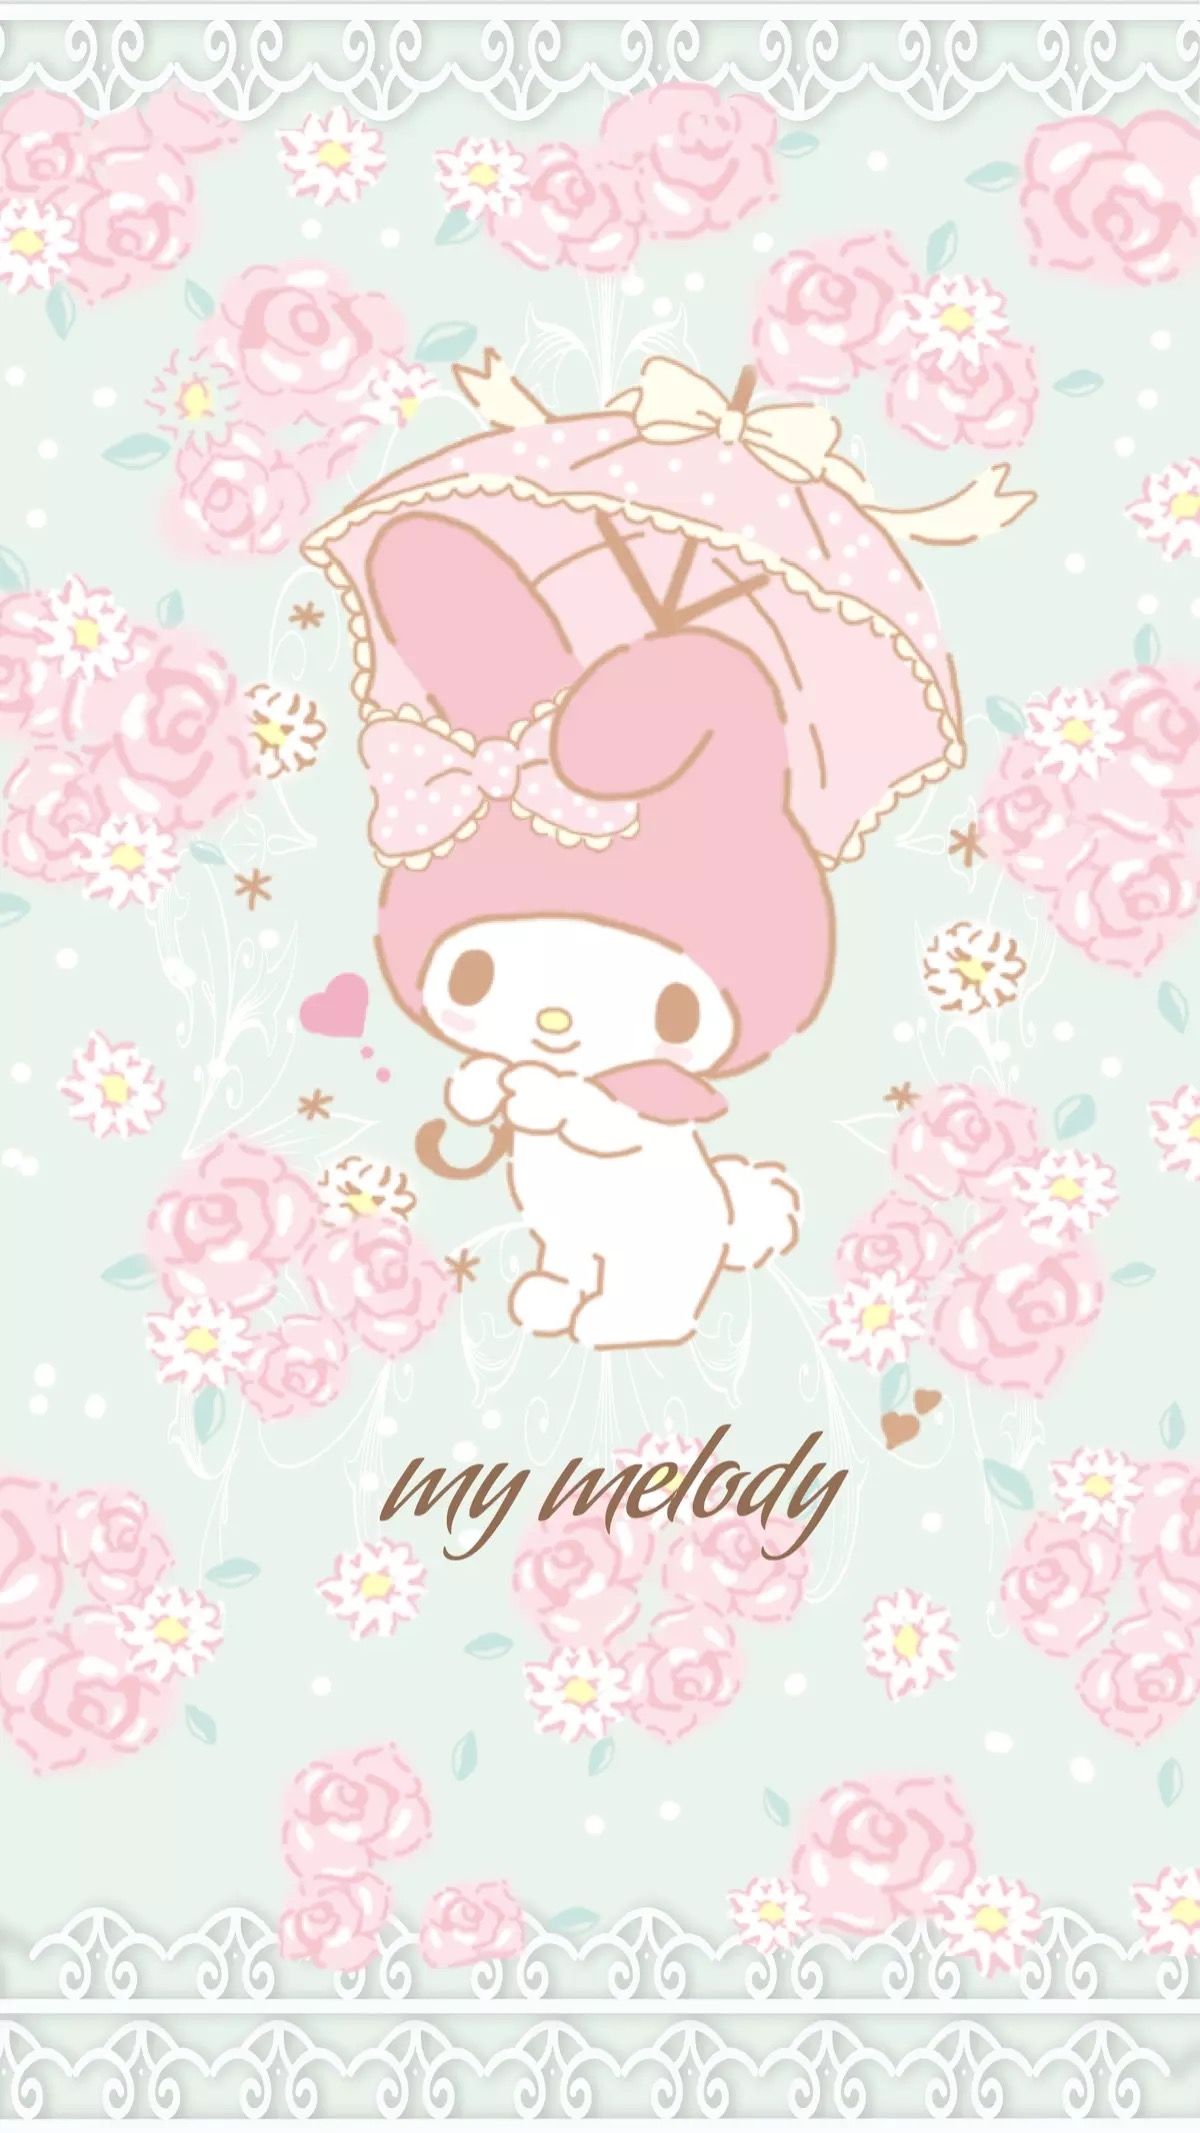 My Melody. My melody, My melody wallpaper, Hello kitty image